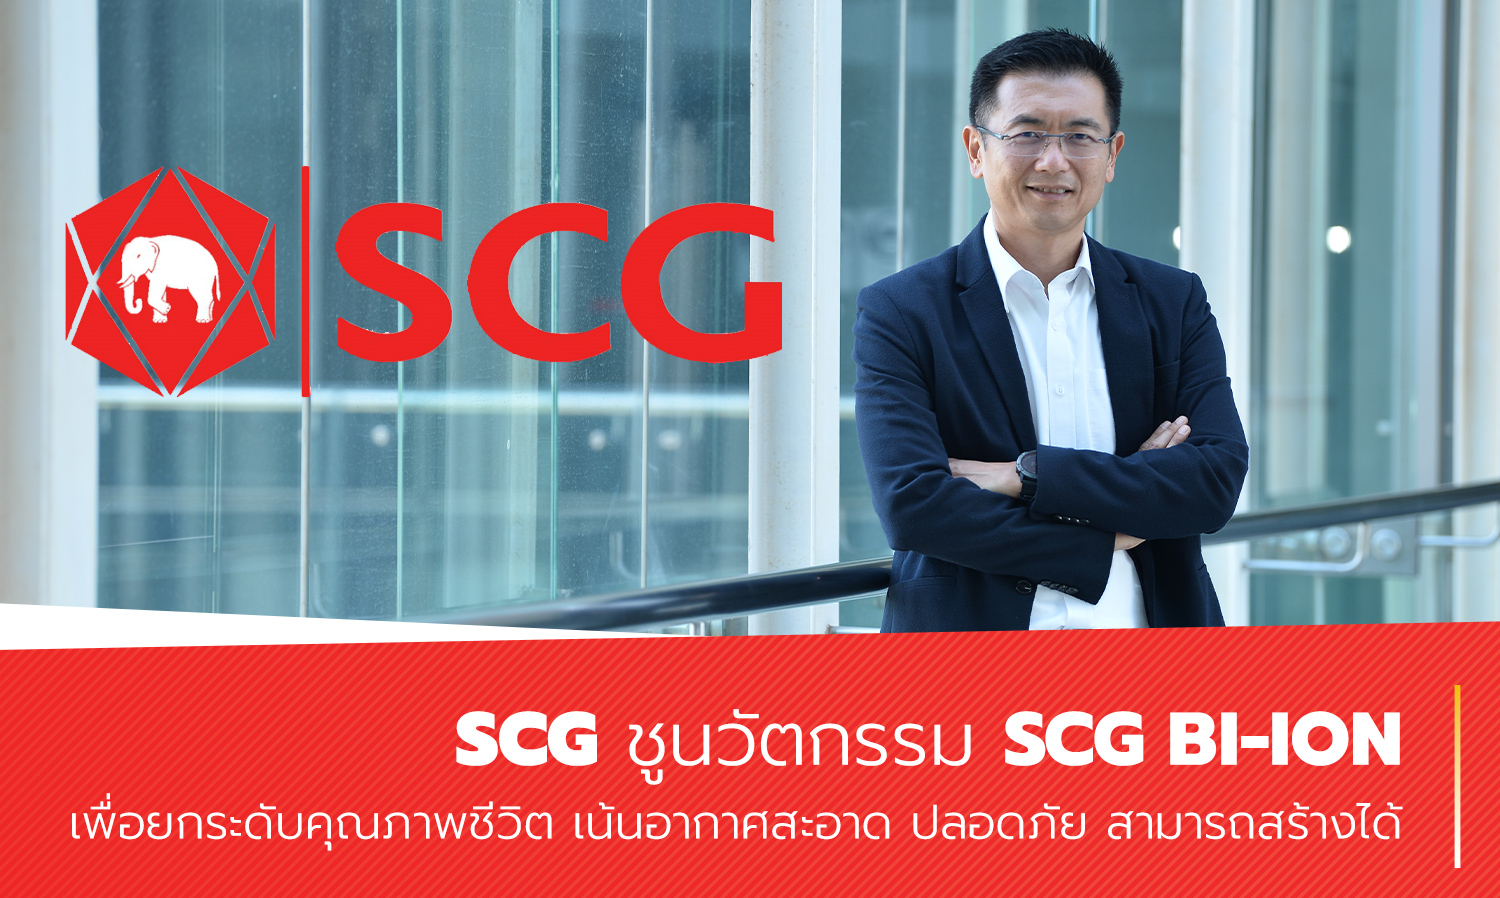 SCG ชูนวัตกรรม SCG Bi-ion เพื่อยกระดับคุณภาพชีวิต เน้นอากาศสะอาด ปลอดภัย สามารถสร้างได้